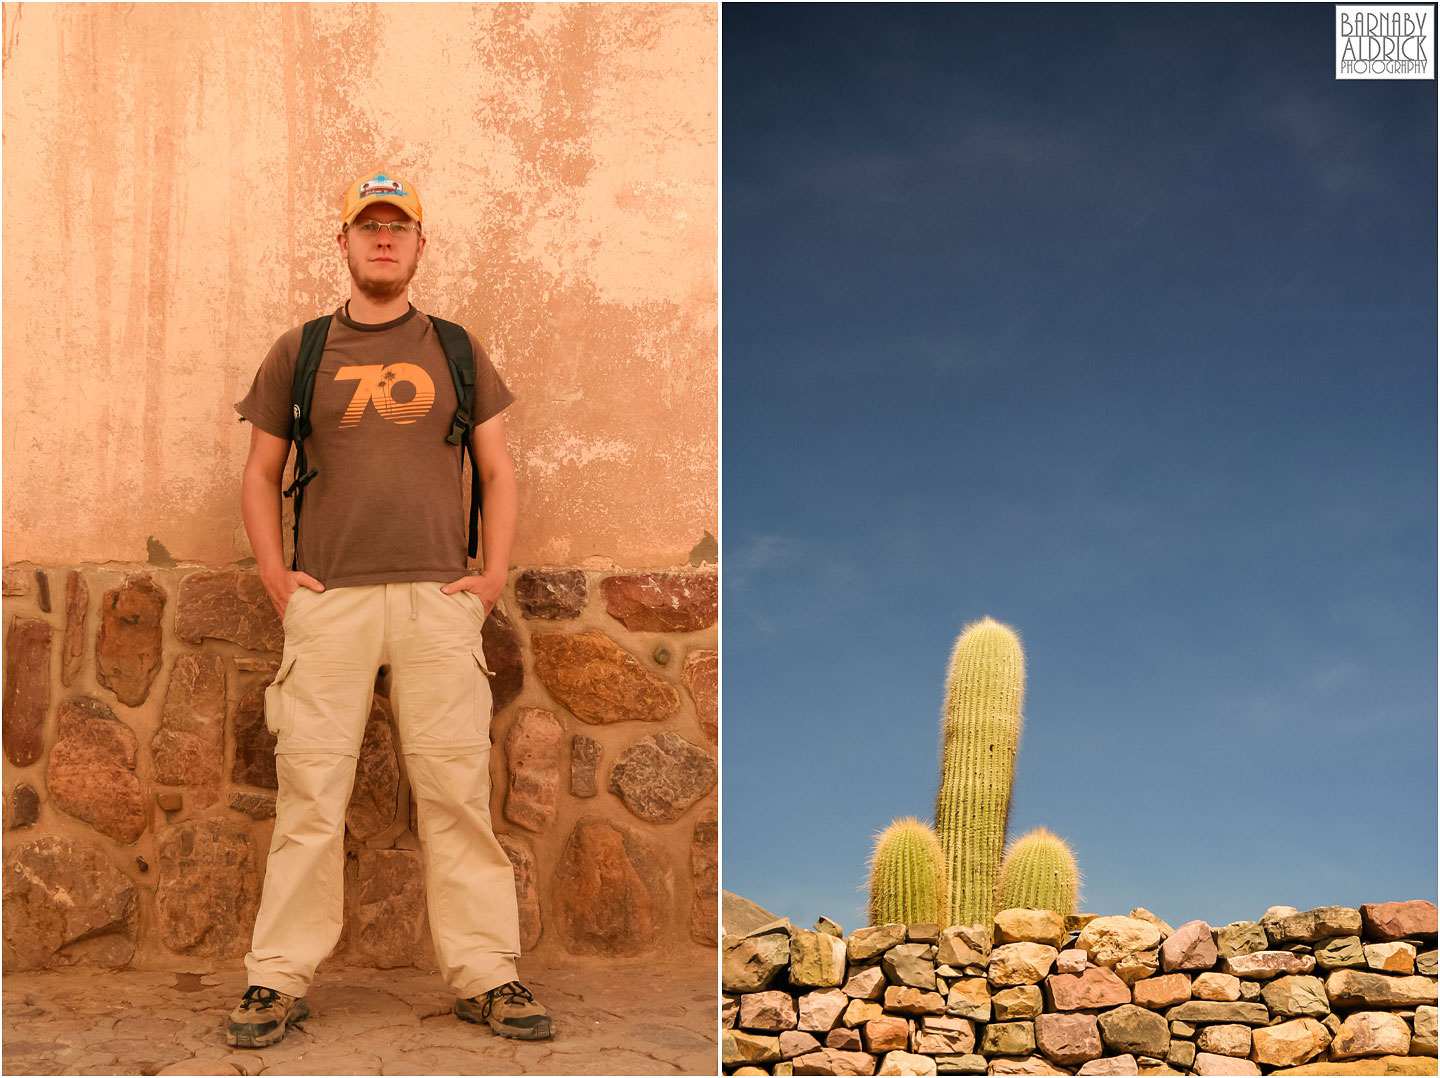 Penis cactus, Barnaby Aldrick Photographer